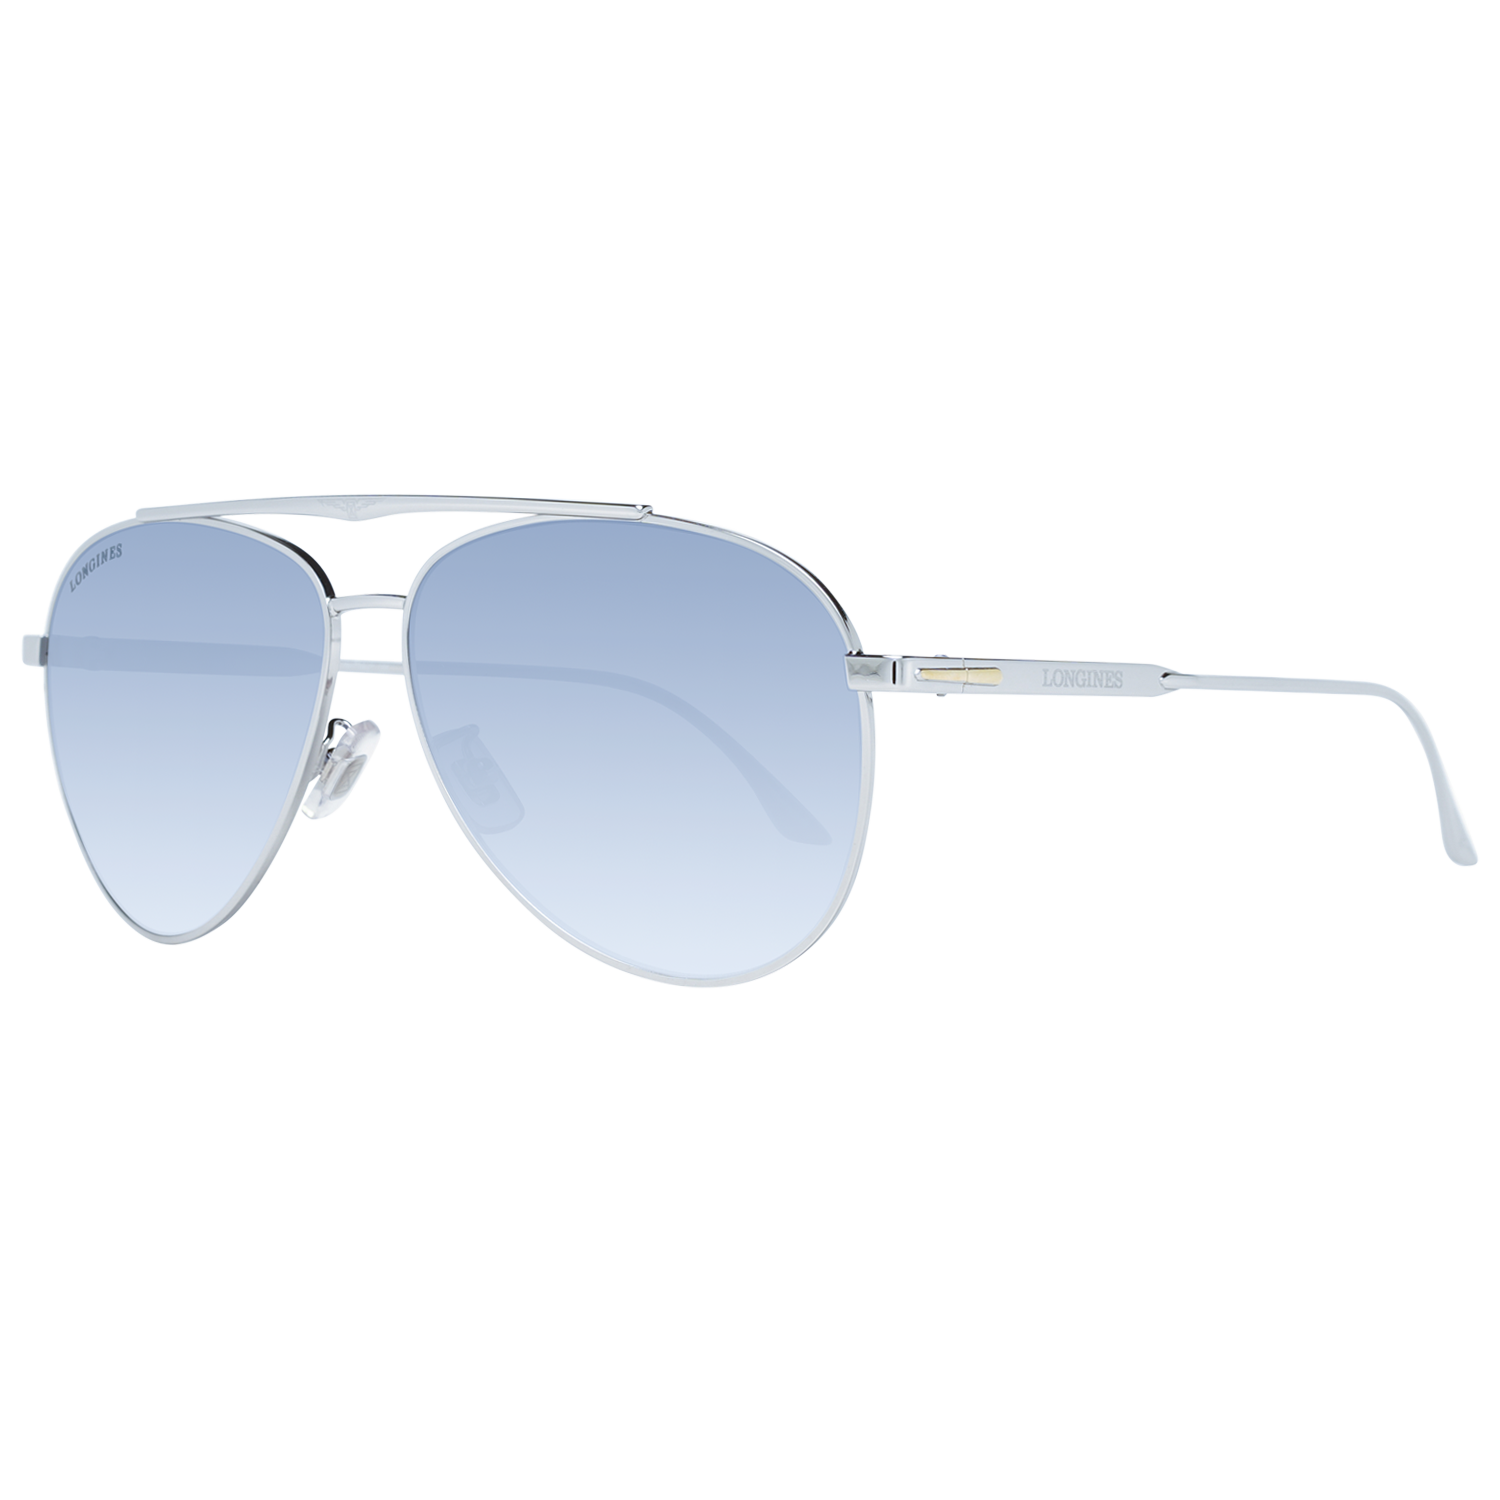 Longines Sunglasses Longines Sunglasses LG0005-H 16C 59mm Eyeglasses Eyewear UK USA Australia 